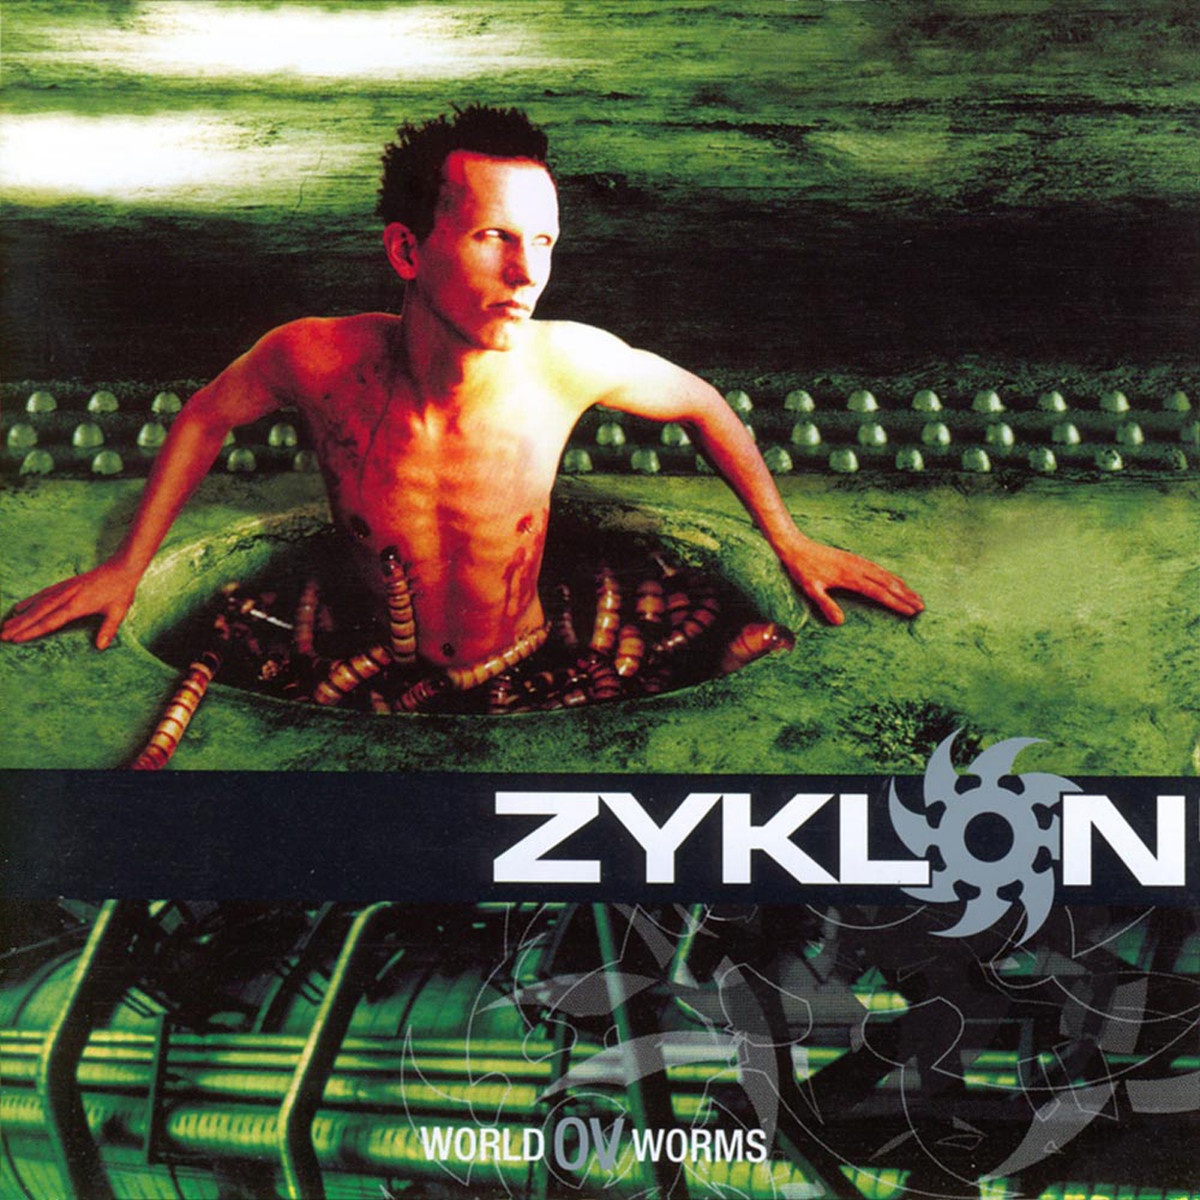 Zycloned - Album